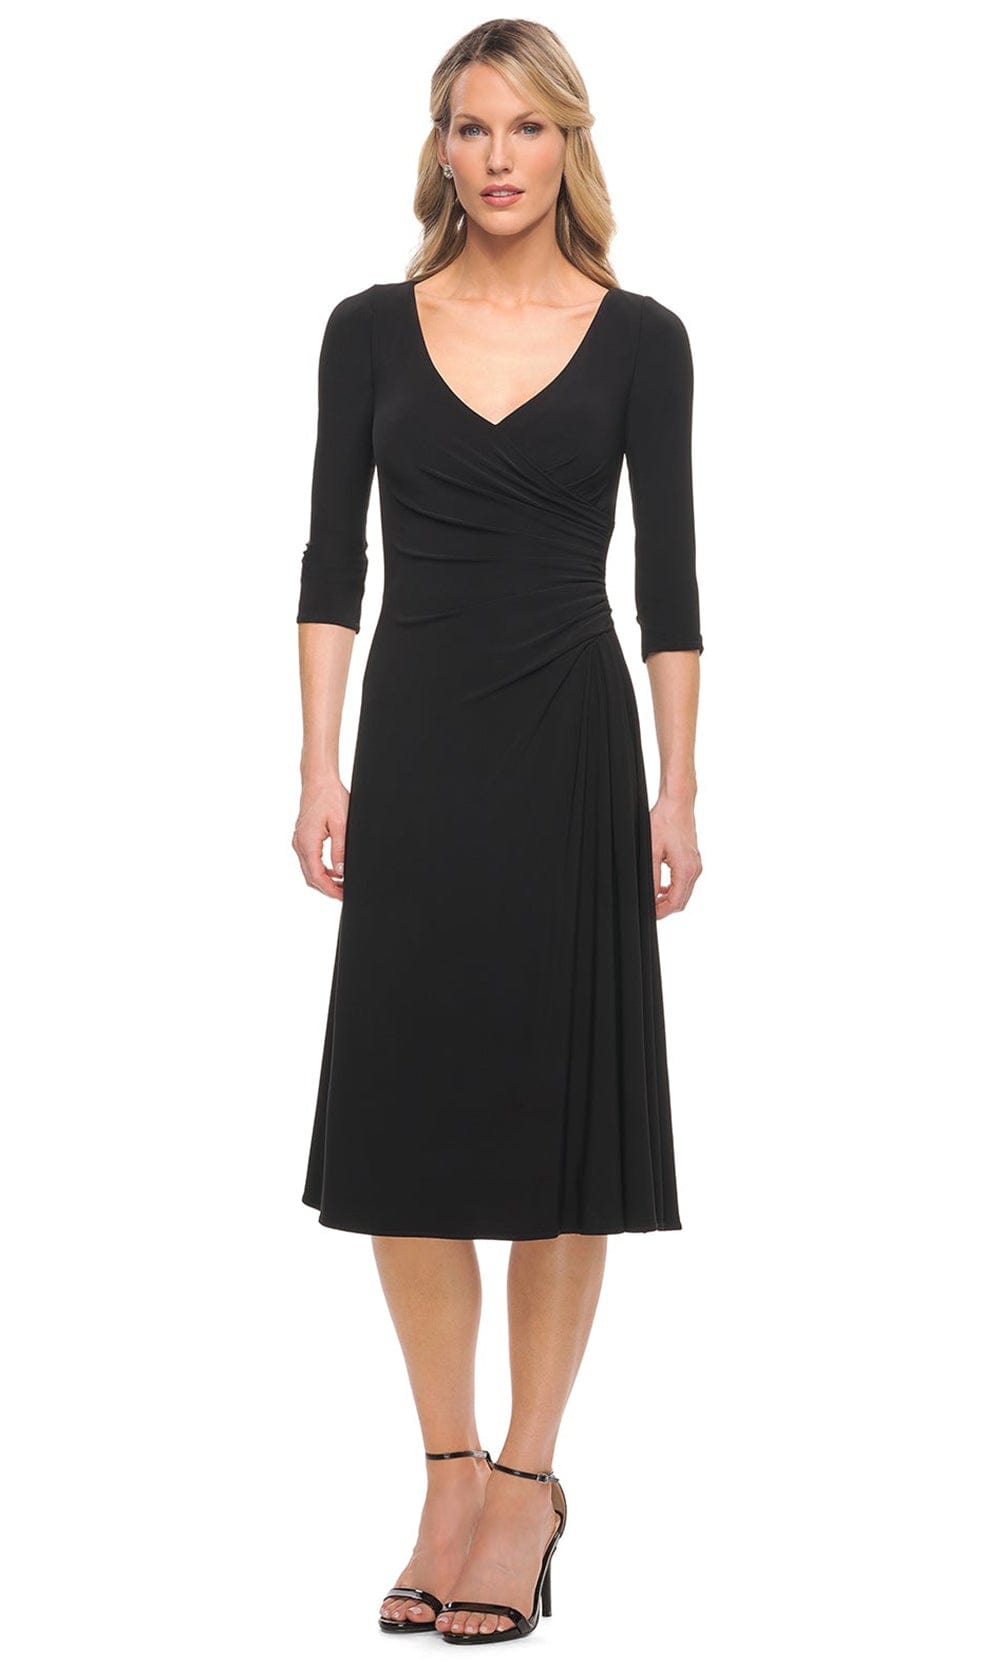 La Femme 30069 - A-Line Knee-Length Dress Special Occasion Dress 4 / Black